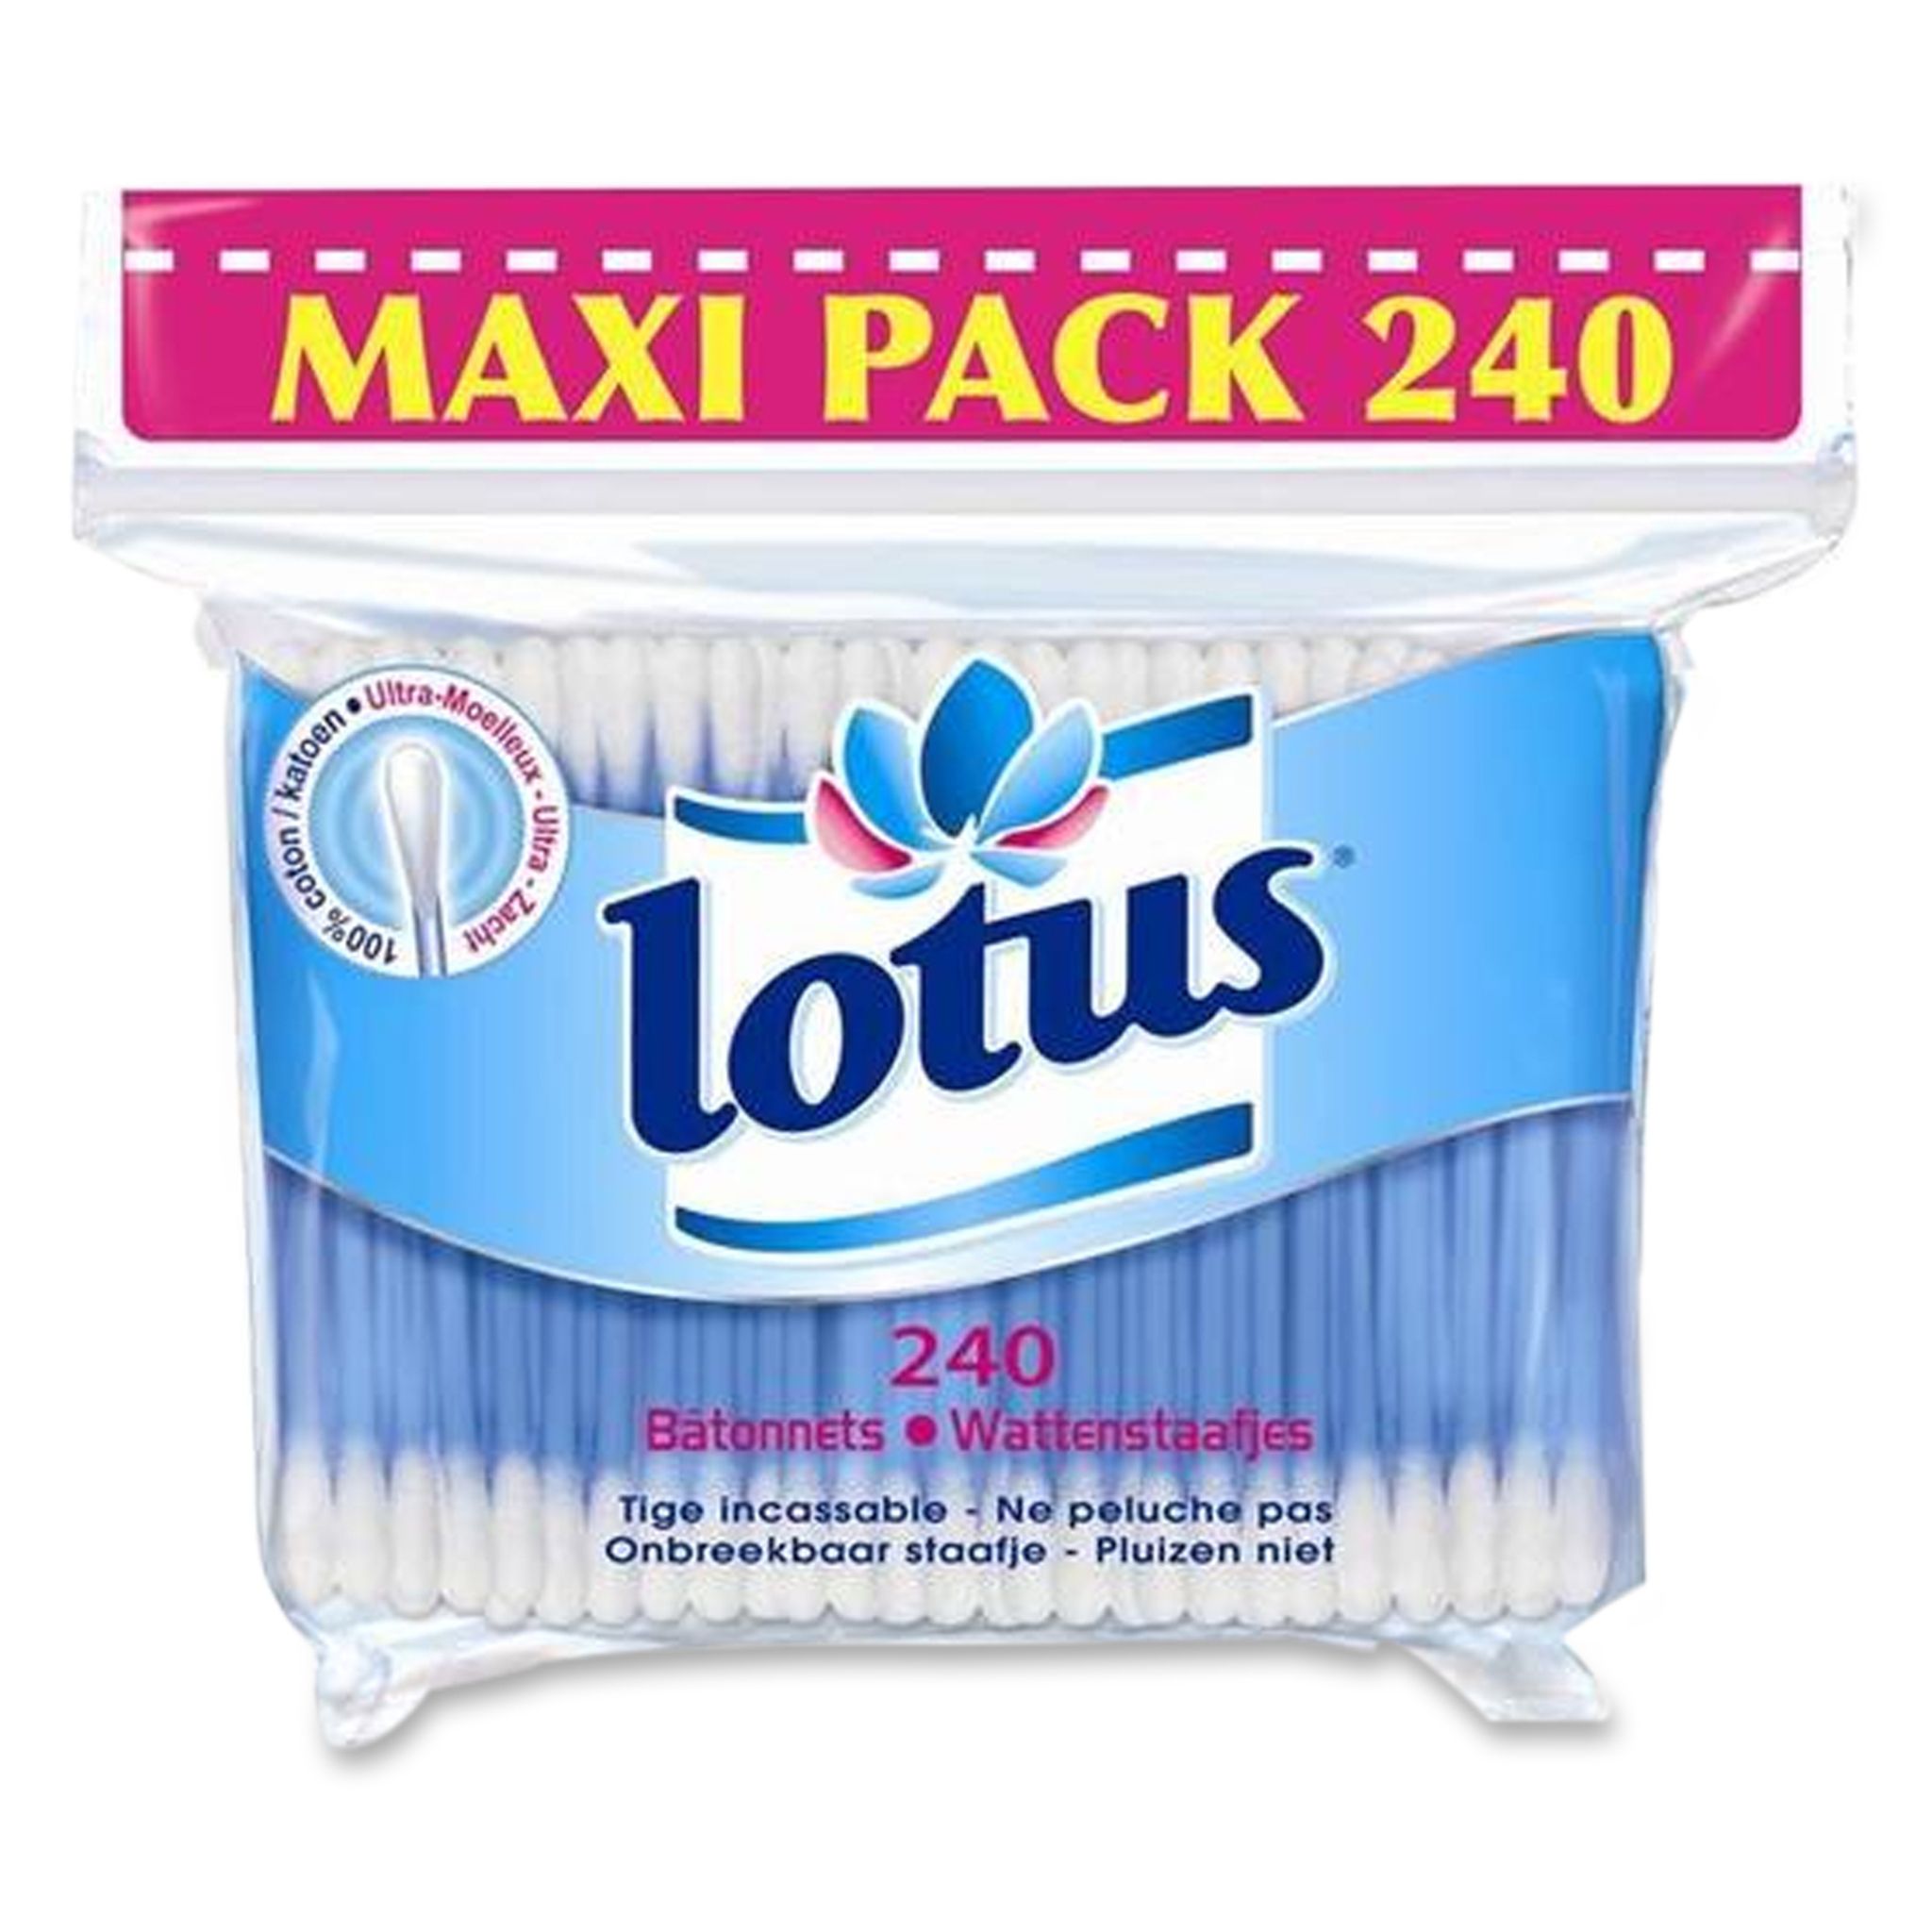 LOTUS Lotus coton-tige maxi recharge x240 pas cher 